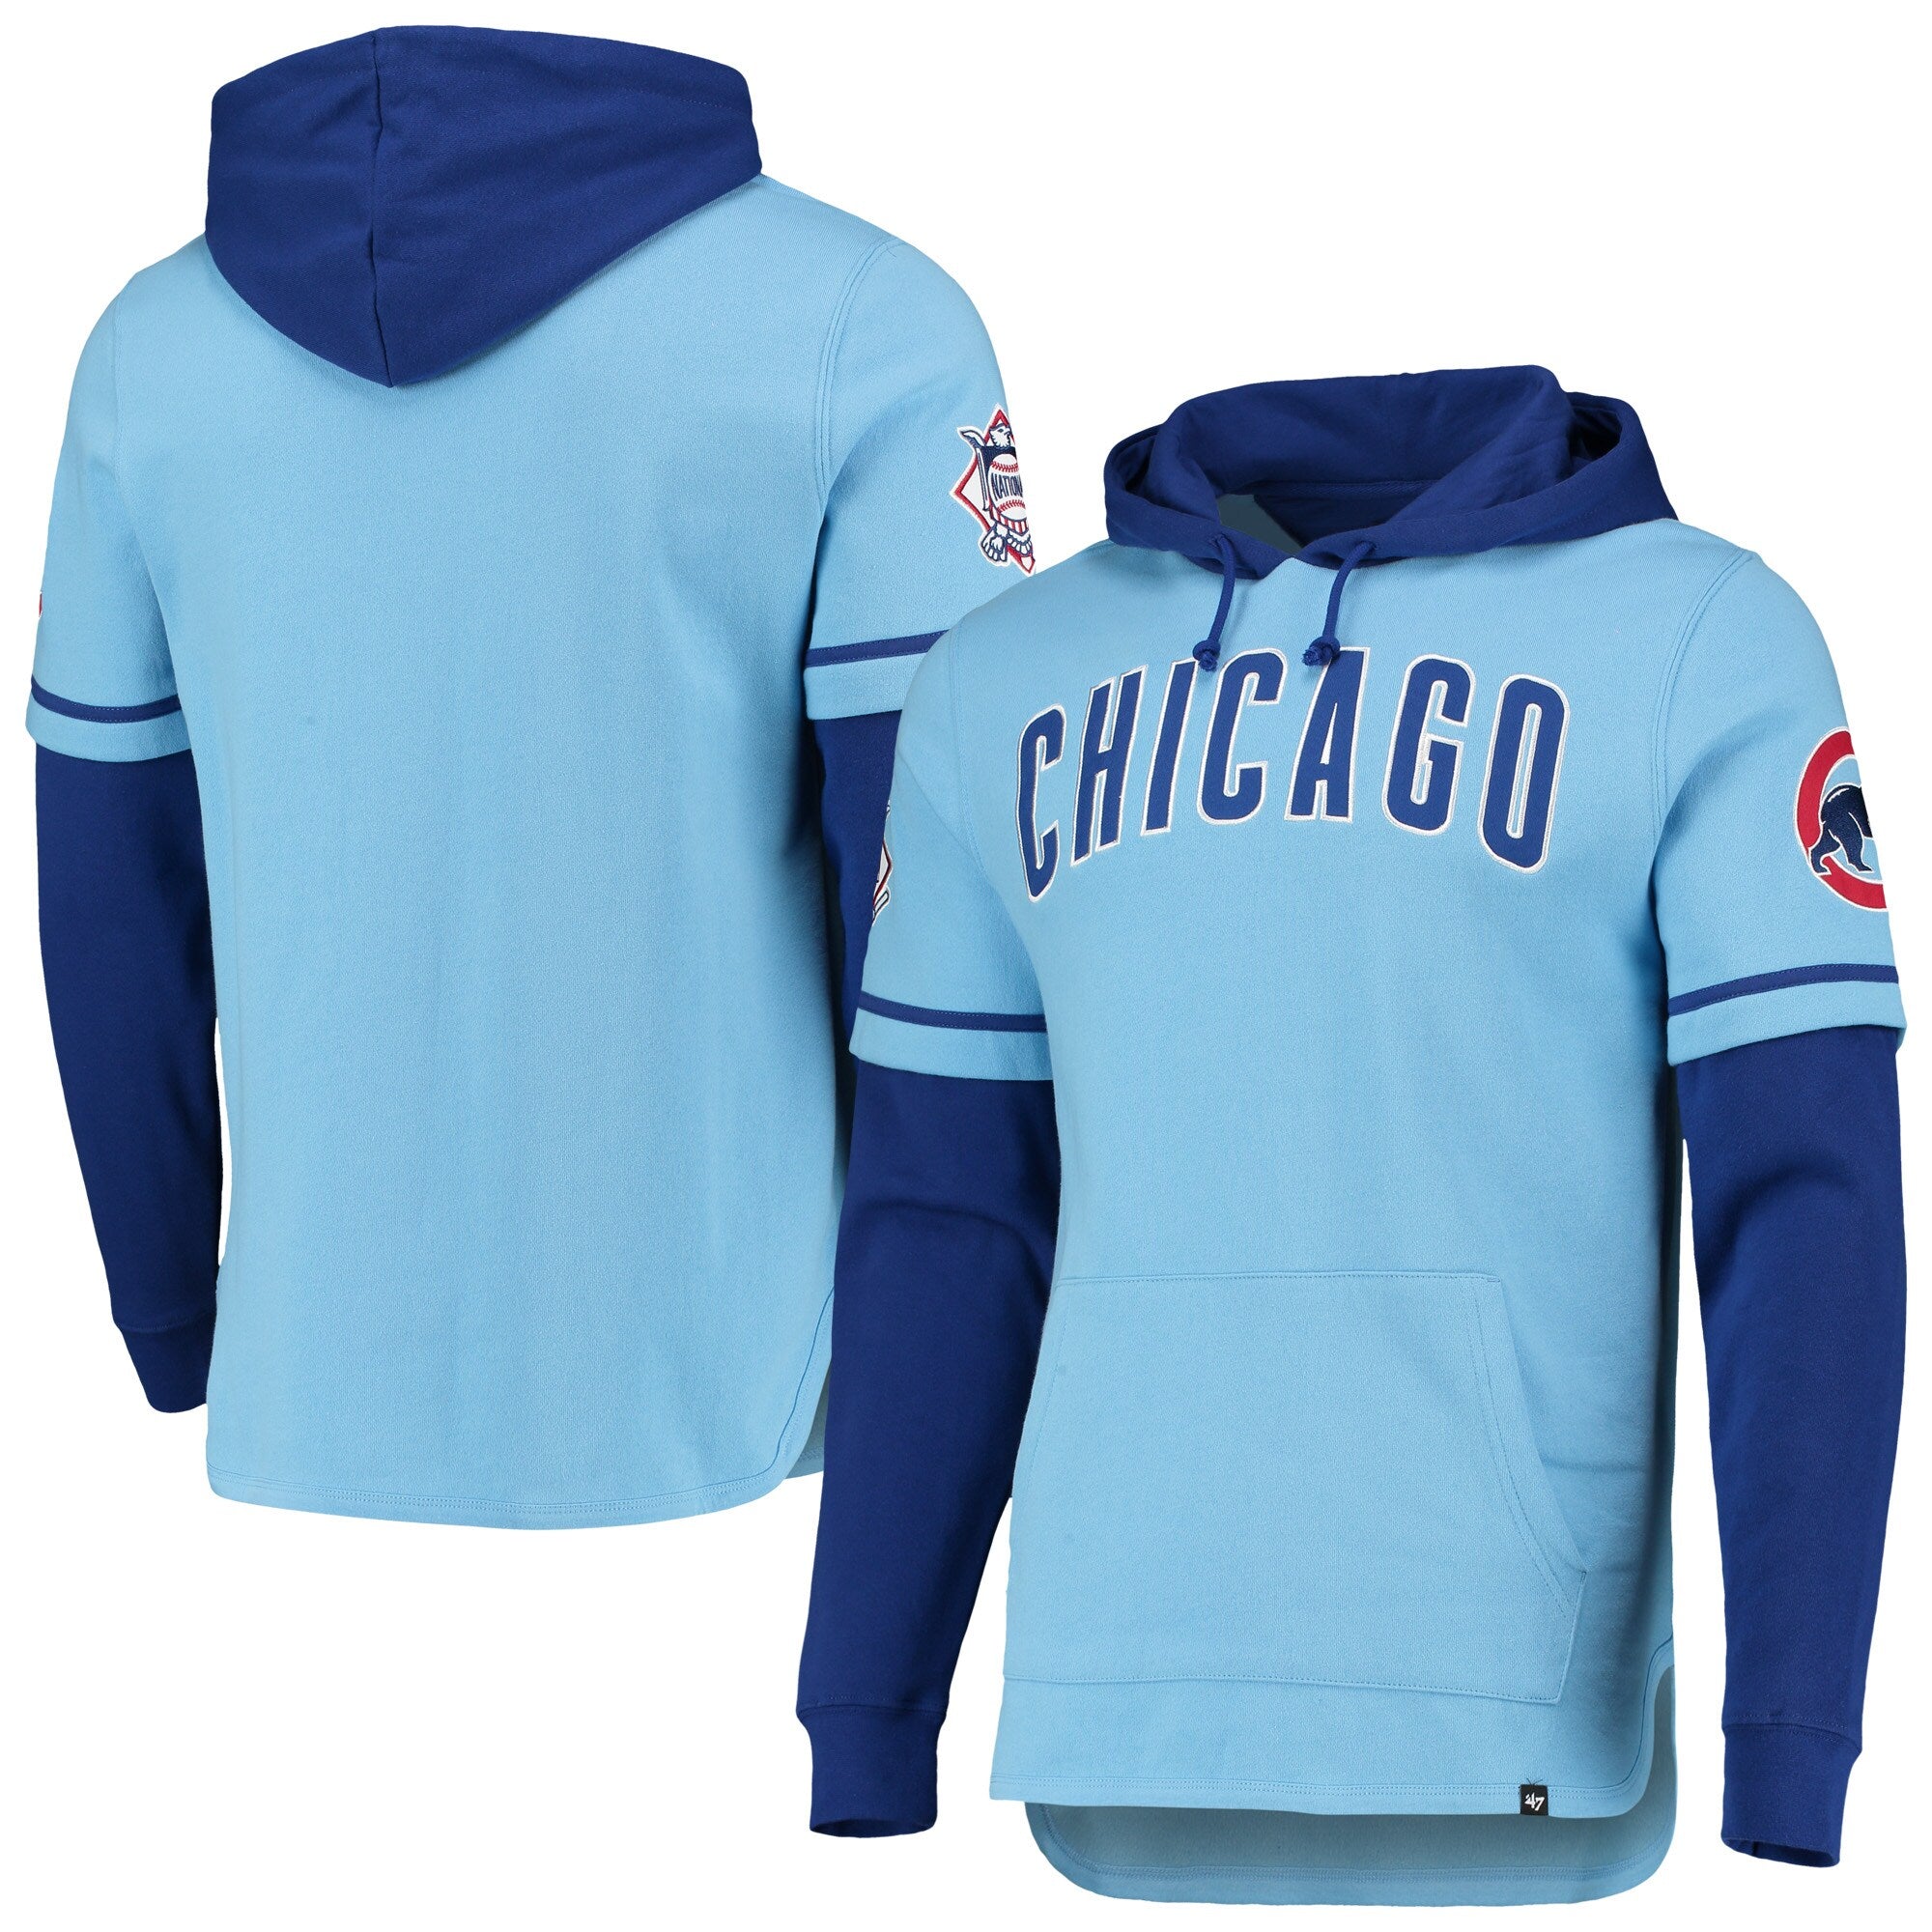 Hands High Boys Chicago Cubs Hoodie Sweatshirt, Blue, L